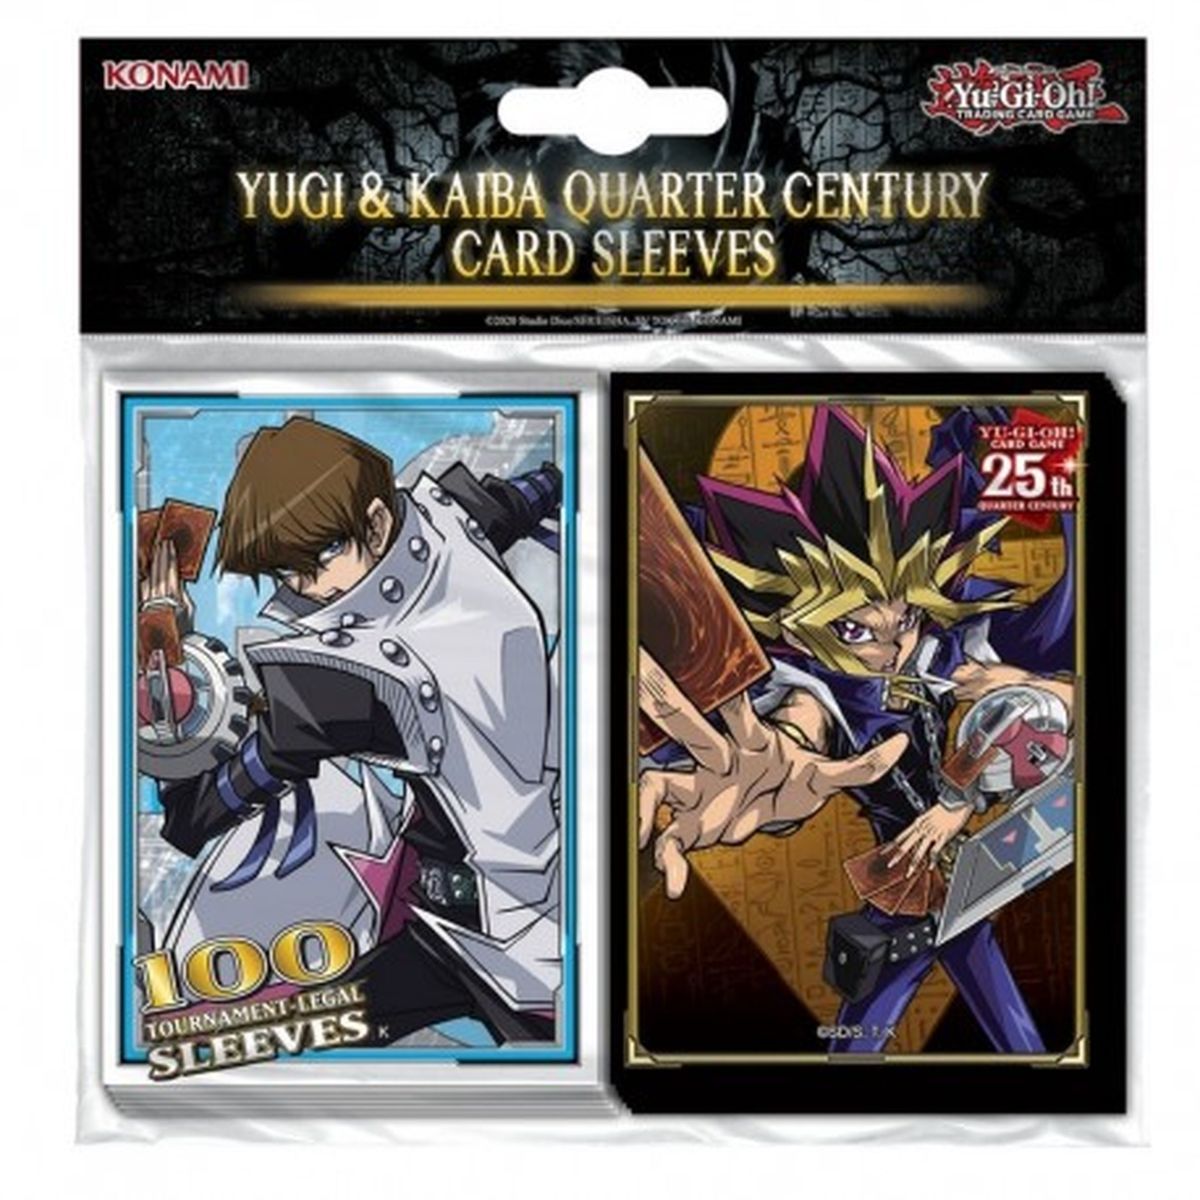 Yu Gi Oh! - Card Sleeves - Small - Yugi & Kaiba Quarter Century